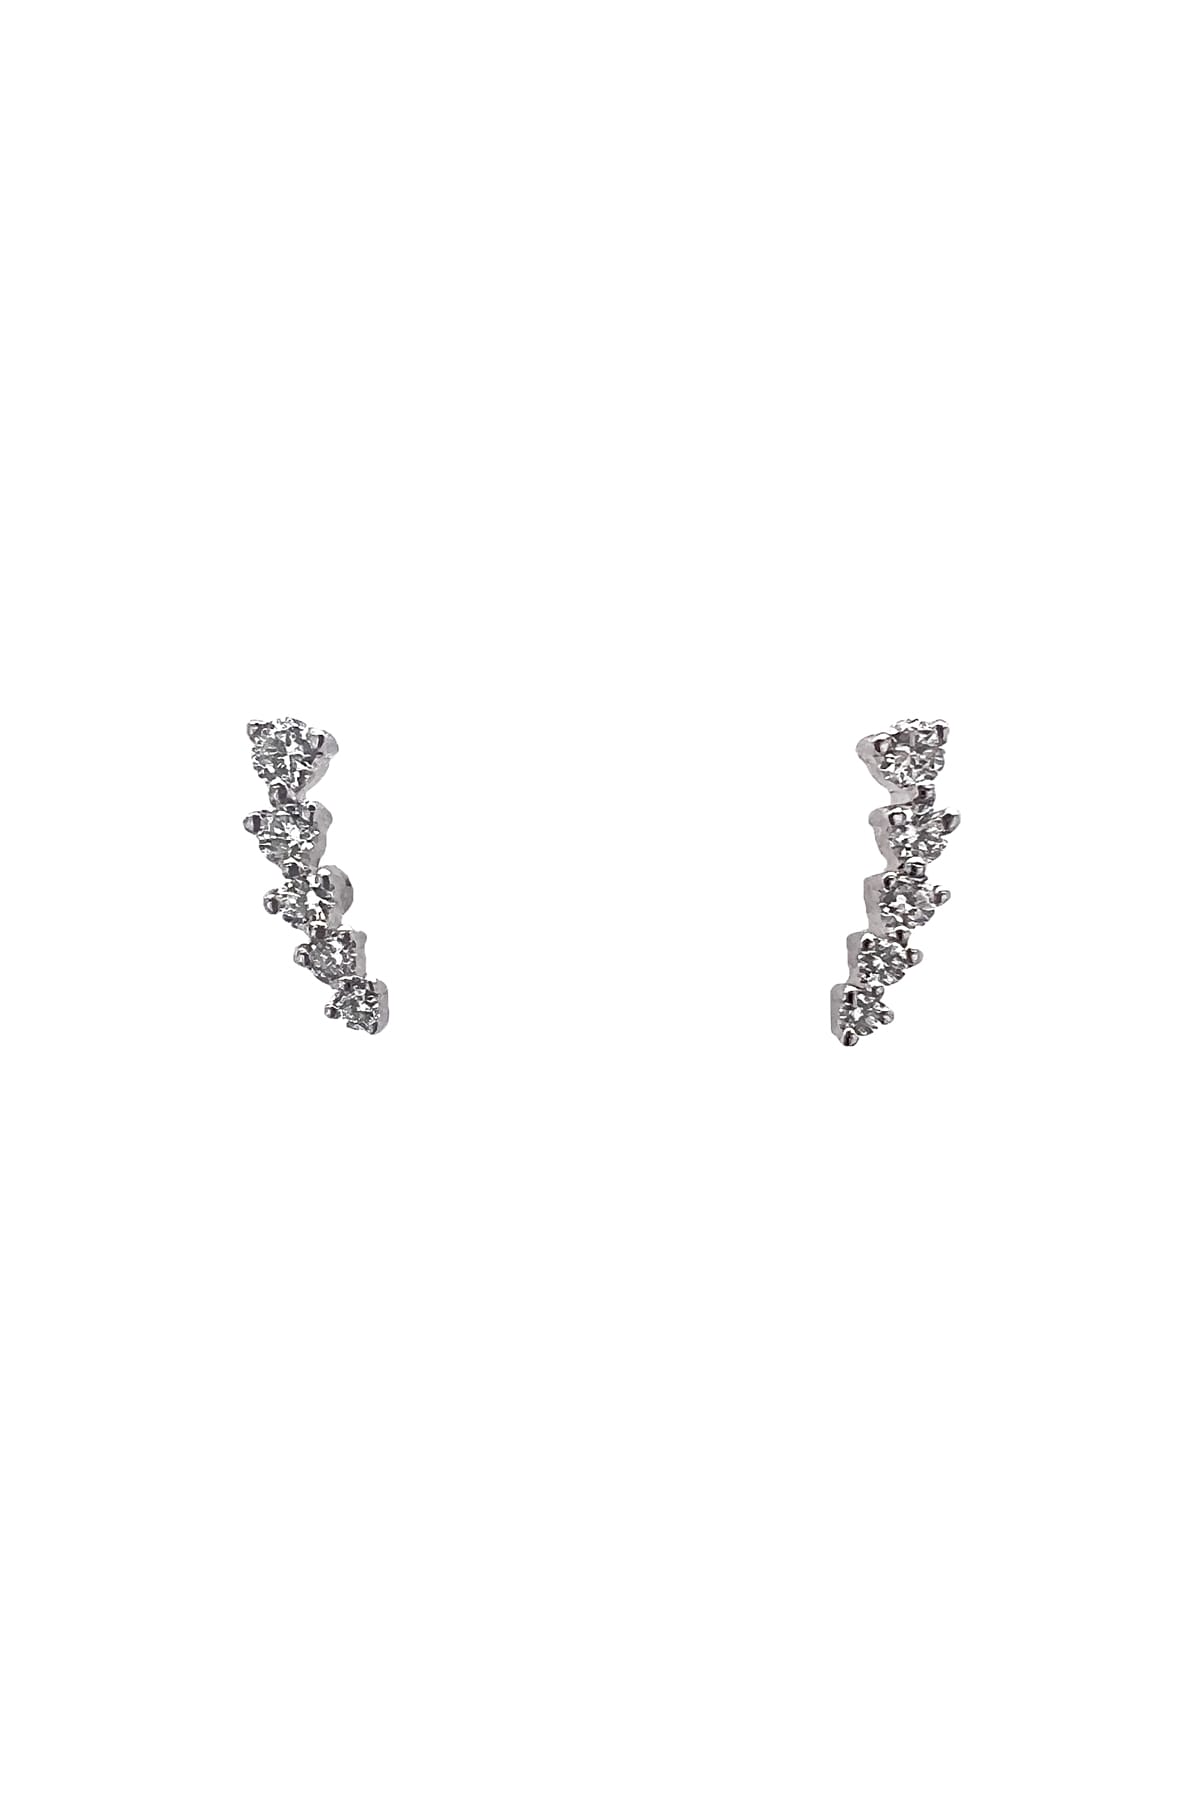 18 Carat White Gold Diamond Earrings available at LeGassick Diamonds and Jewellery Gold Coast, Australia.